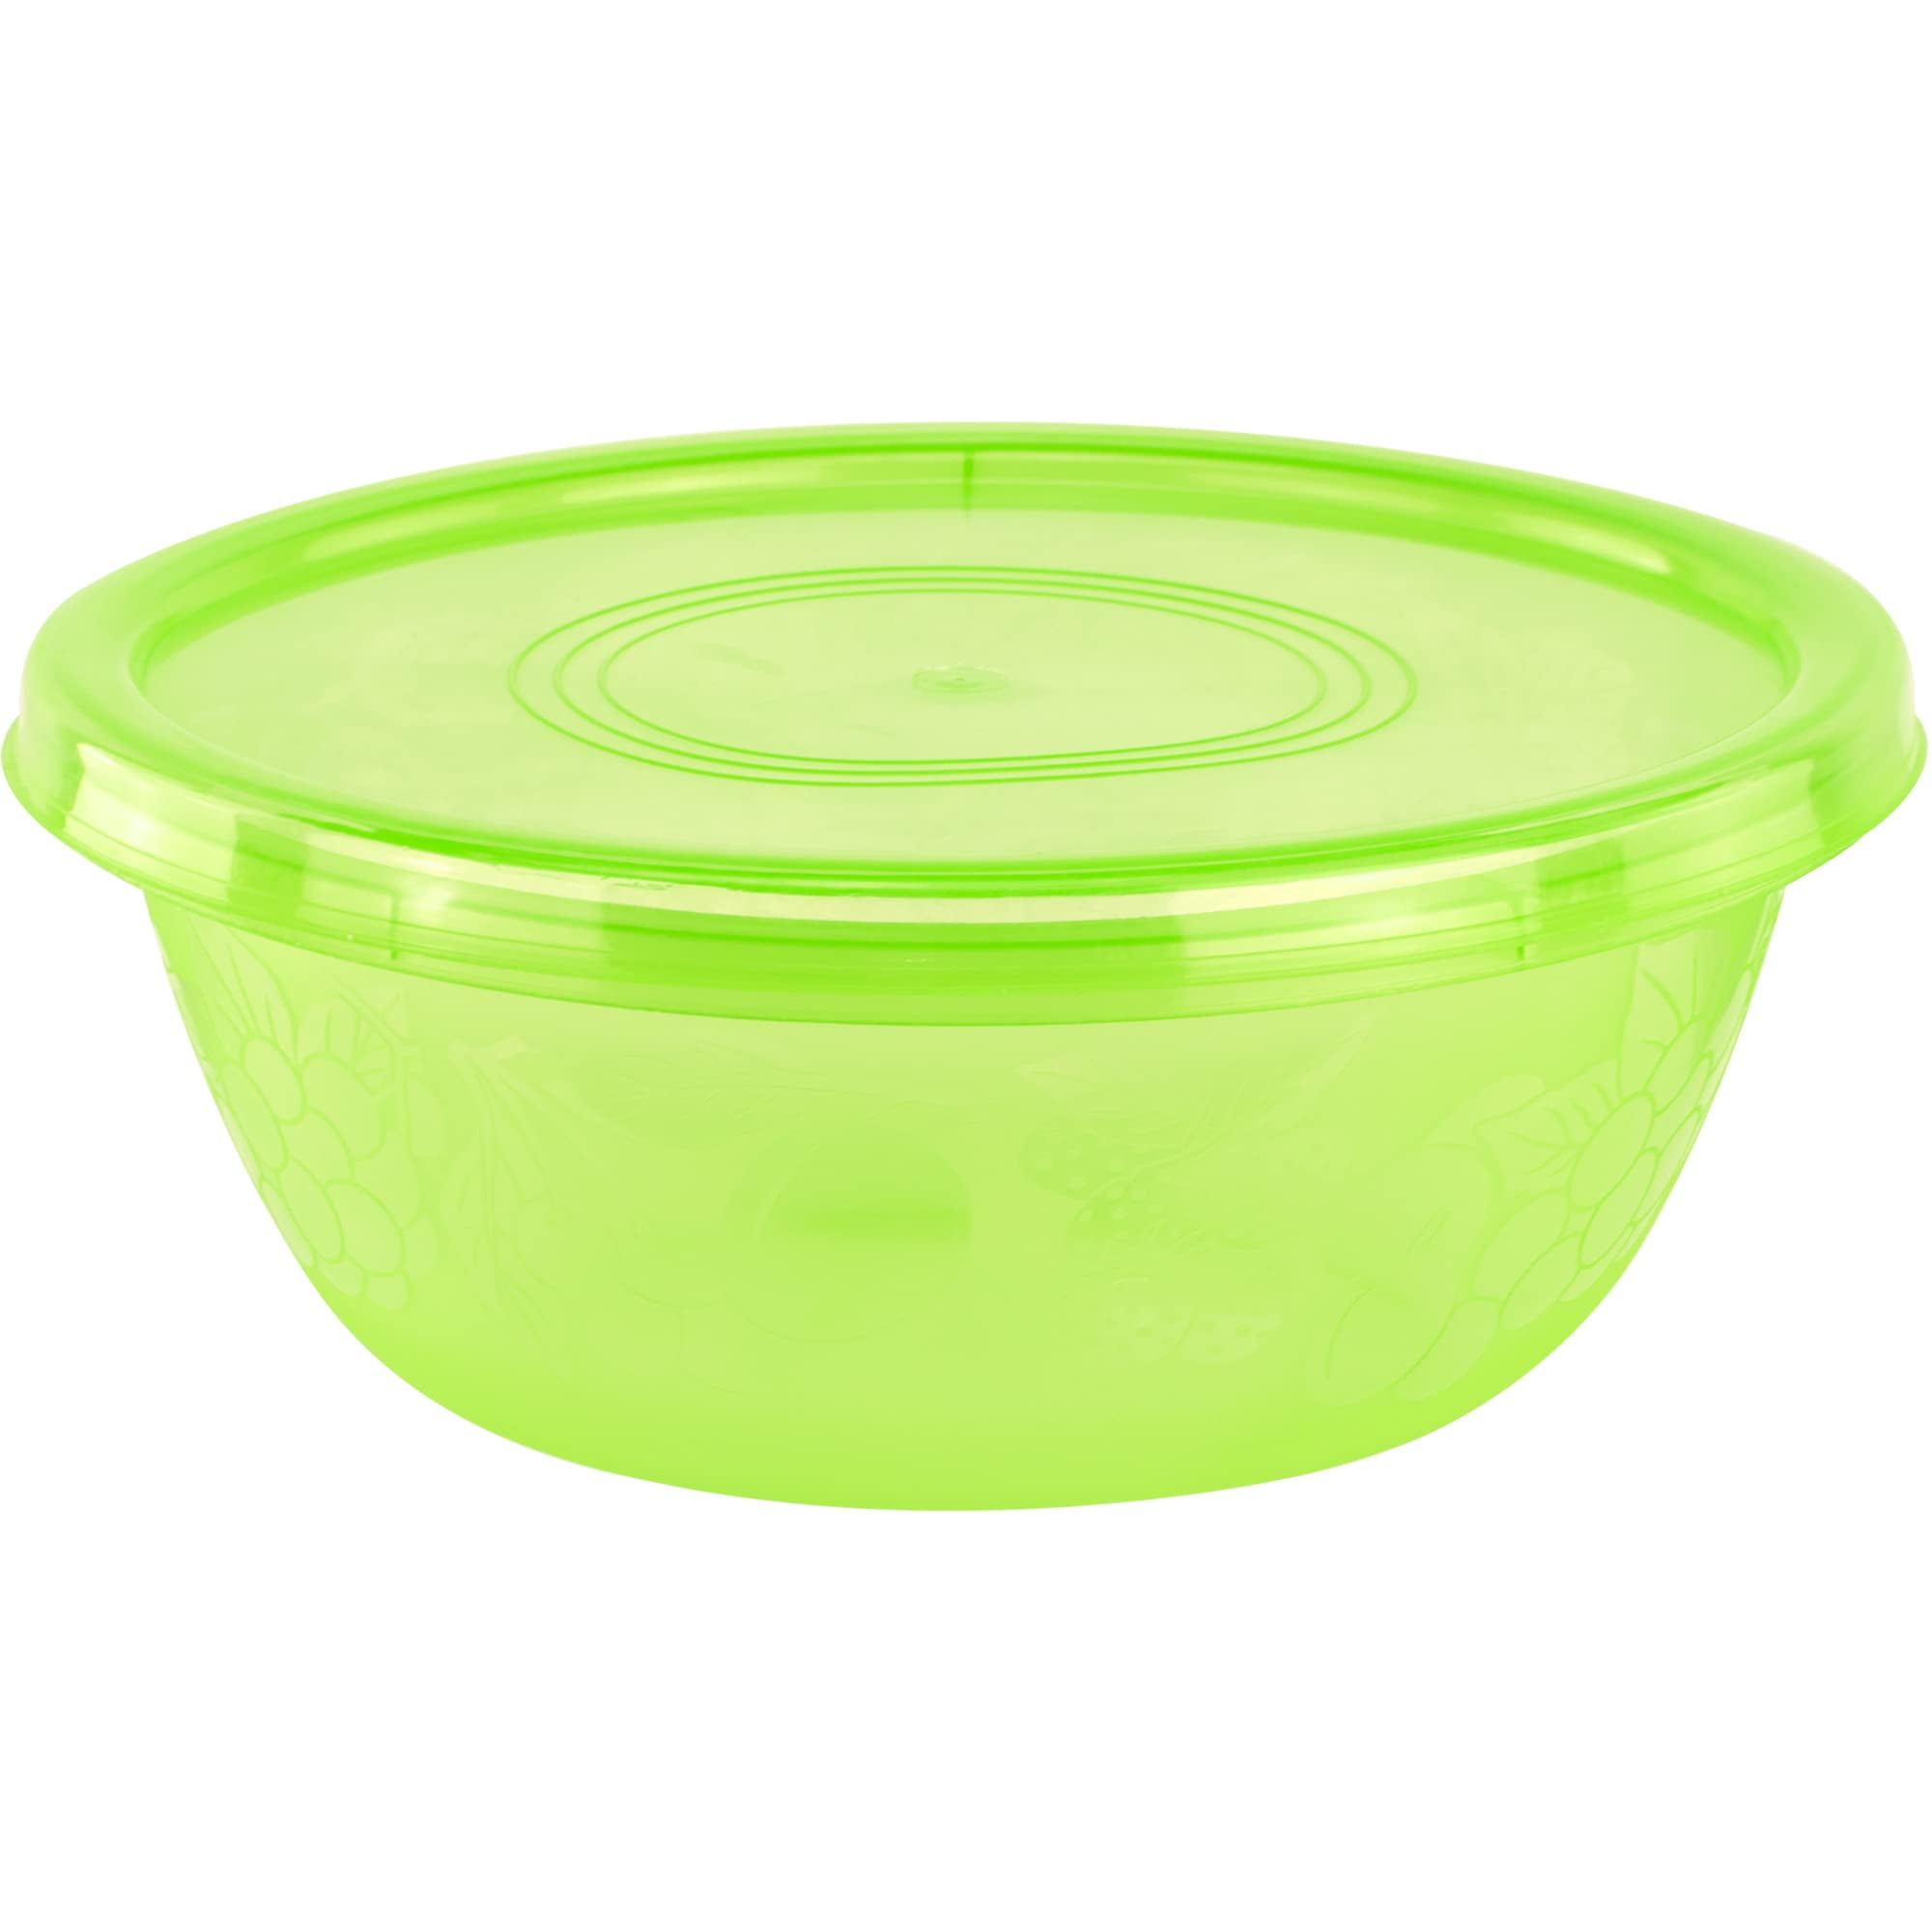 DecorRack Plastic Serving Bowl with Lid, White (1 Bowl)